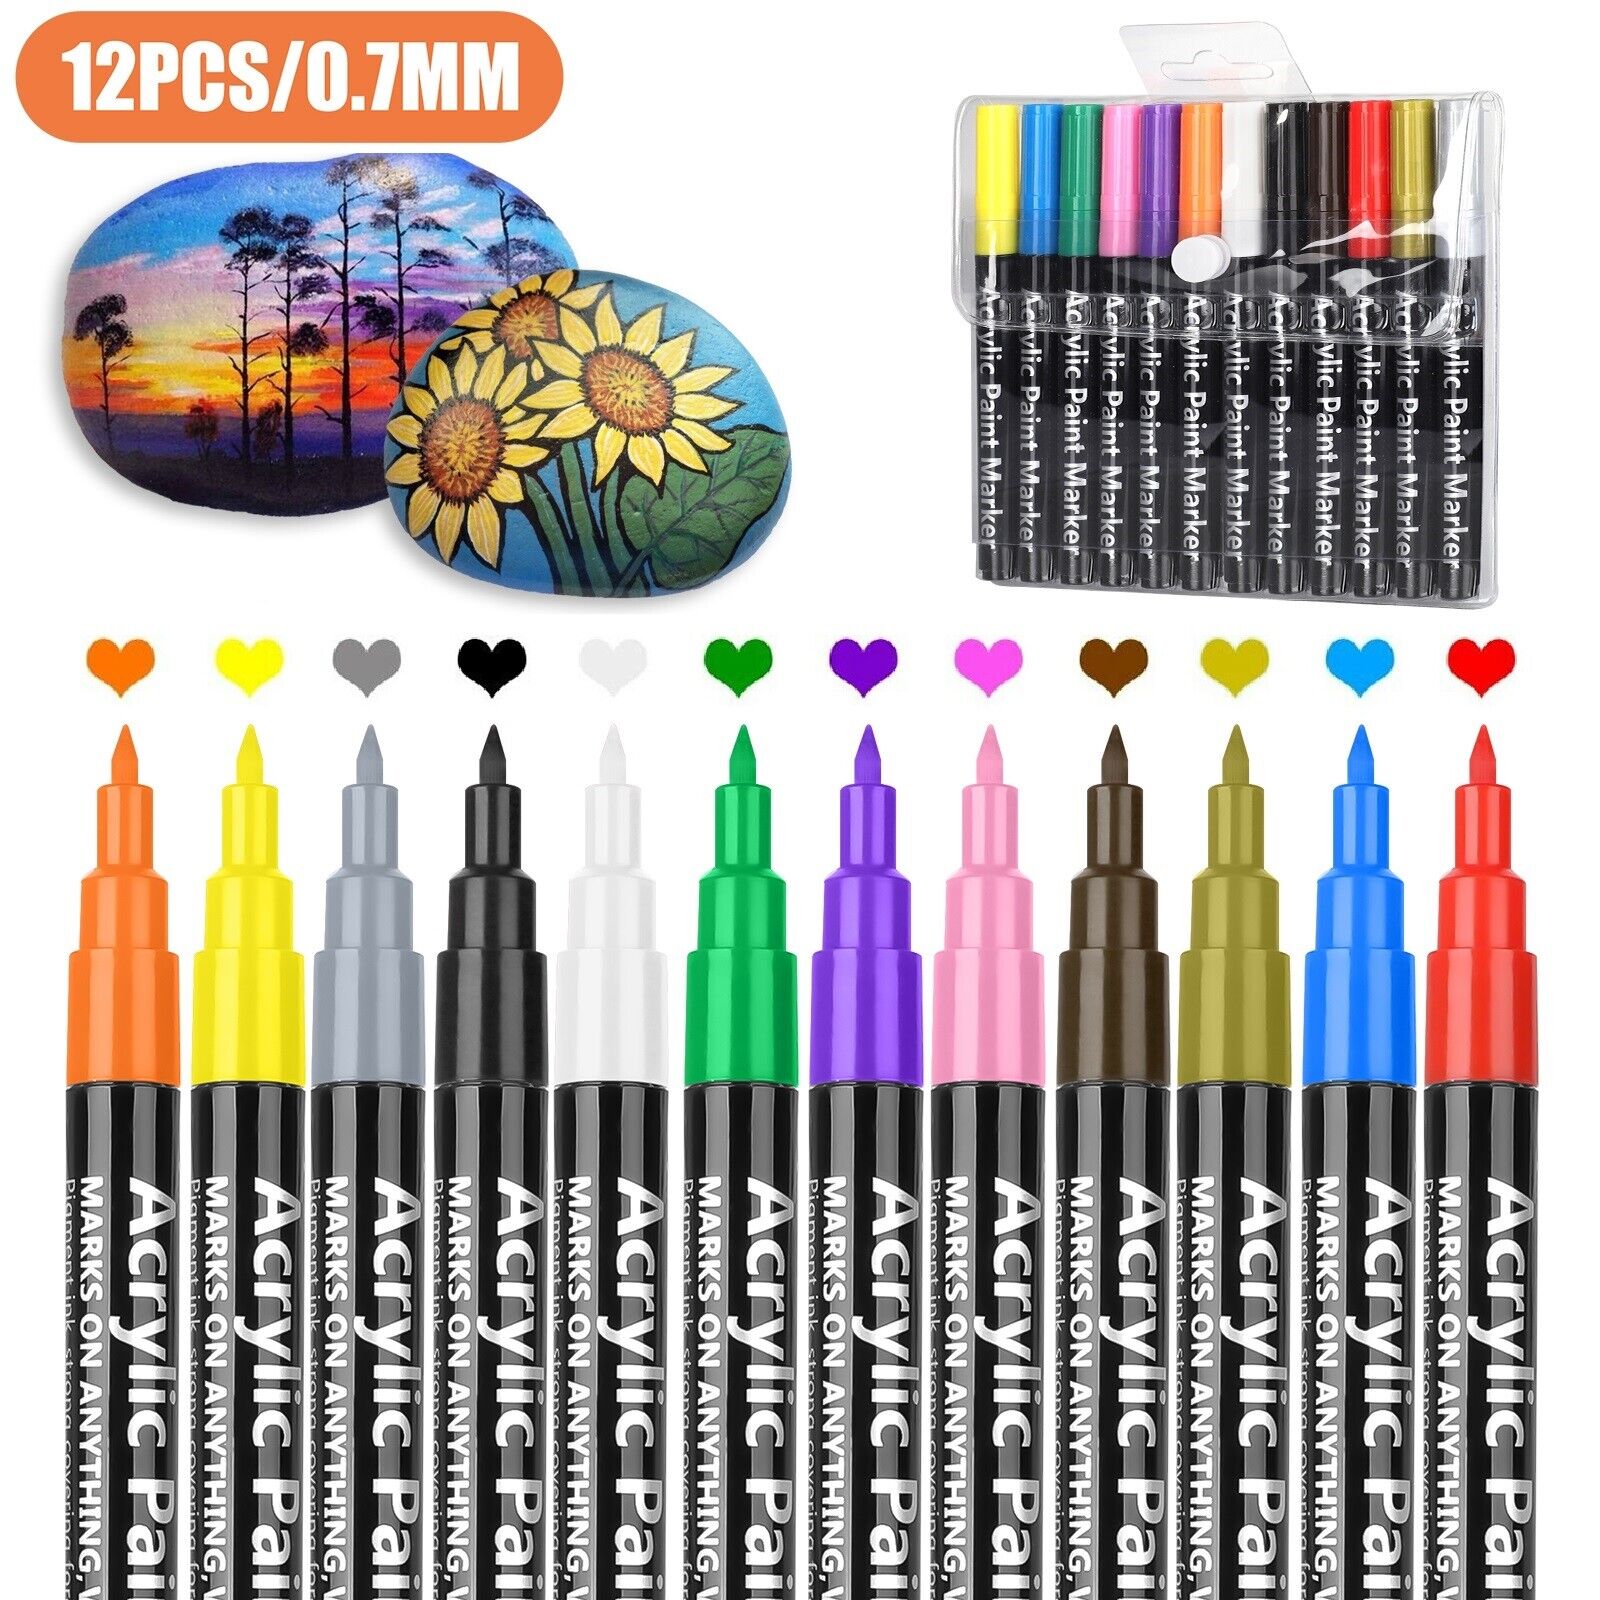 Waterproof Permanent Acrylic Marker 12PCS Paint Pens Set for Art Drawing Project